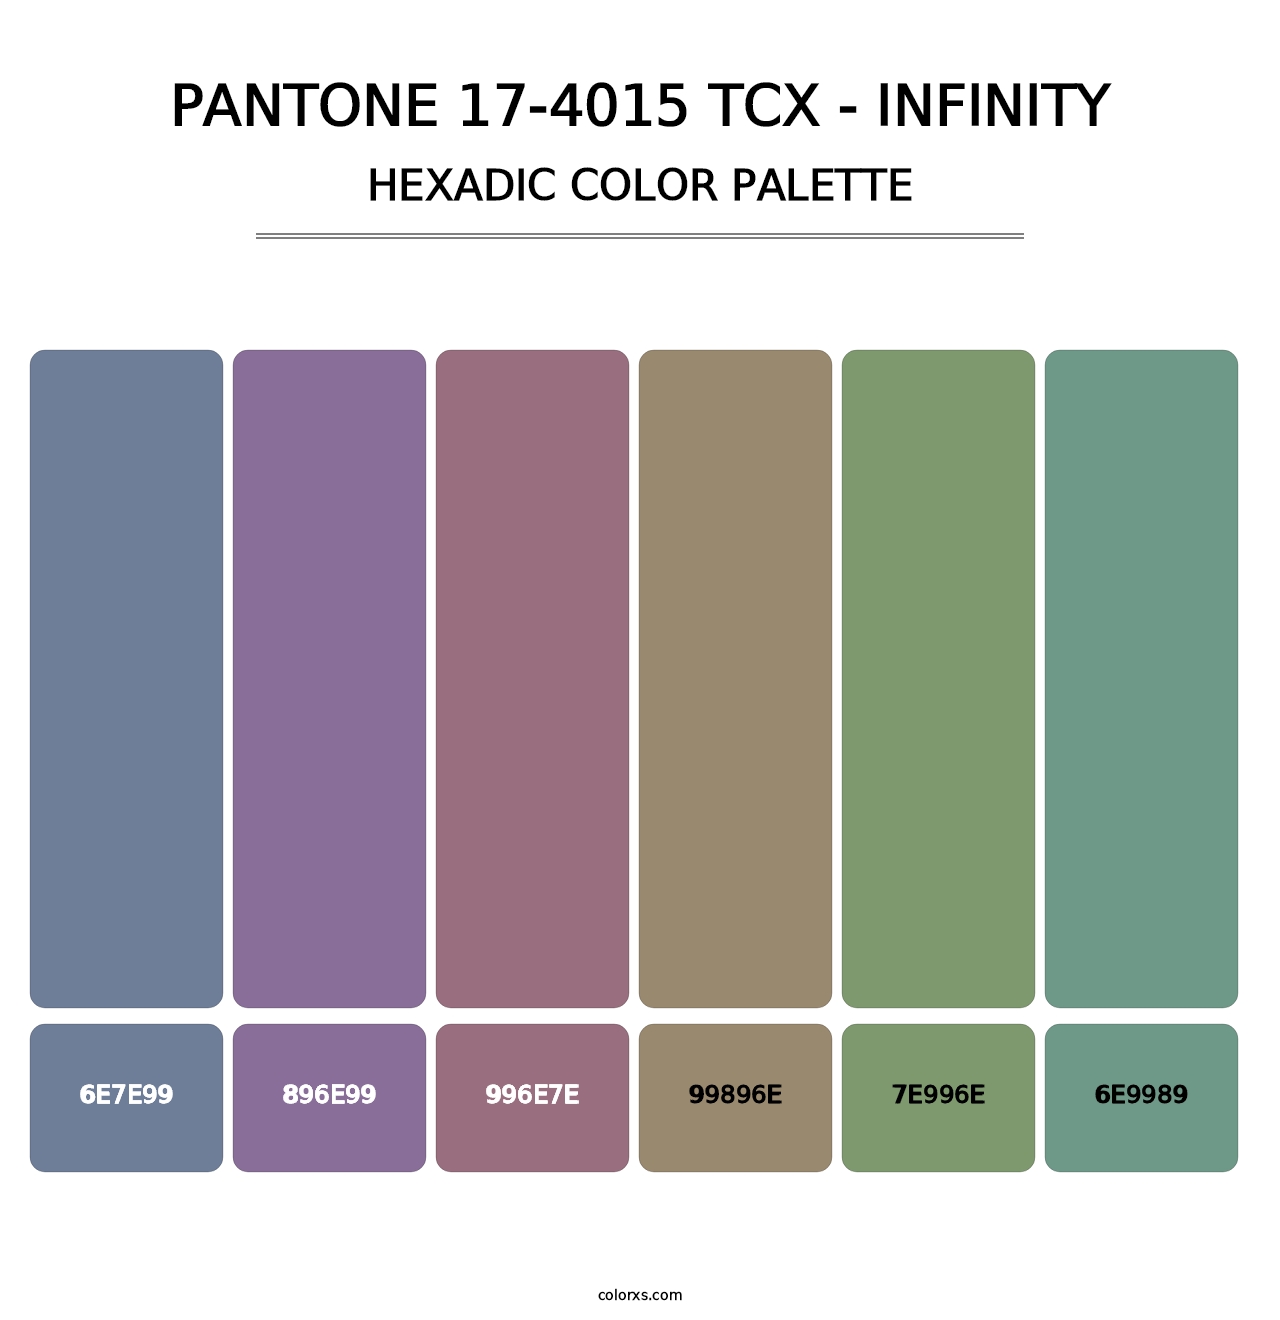 PANTONE 17-4015 TCX - Infinity - Hexadic Color Palette